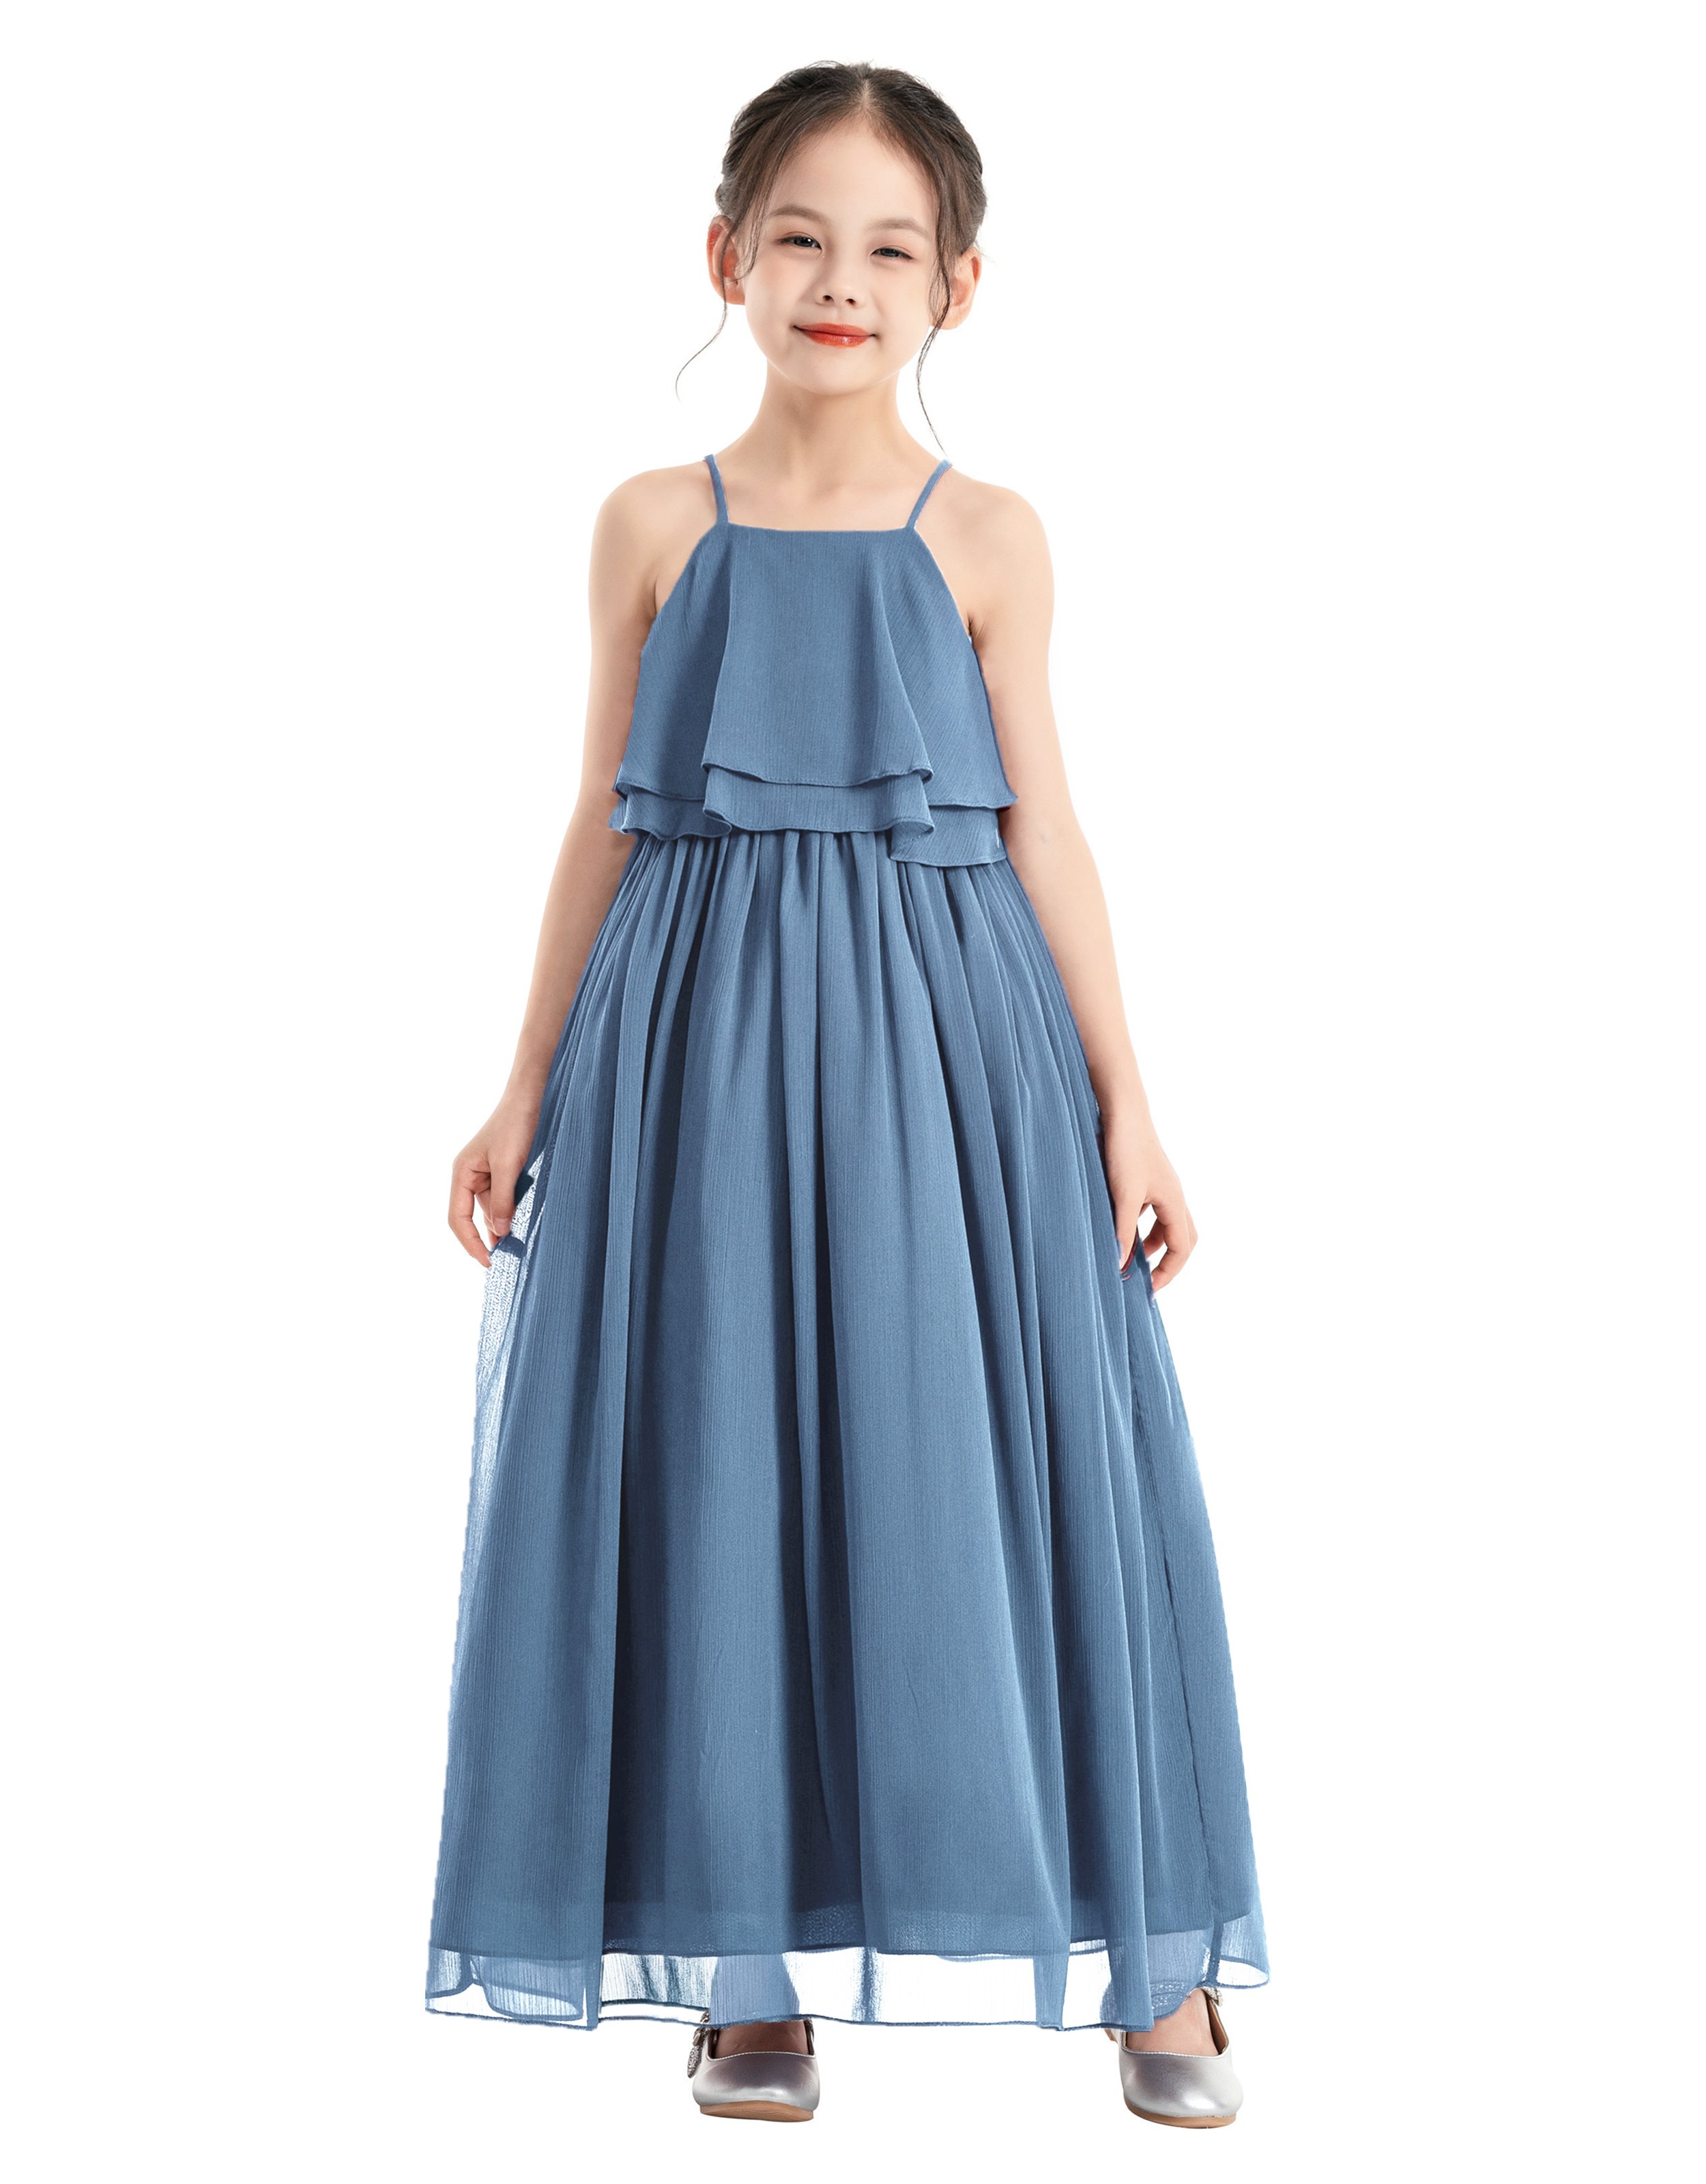 Steel Blue A-Line Ruffle Chiffon Dress Chiffon Flower Girl Dress 192